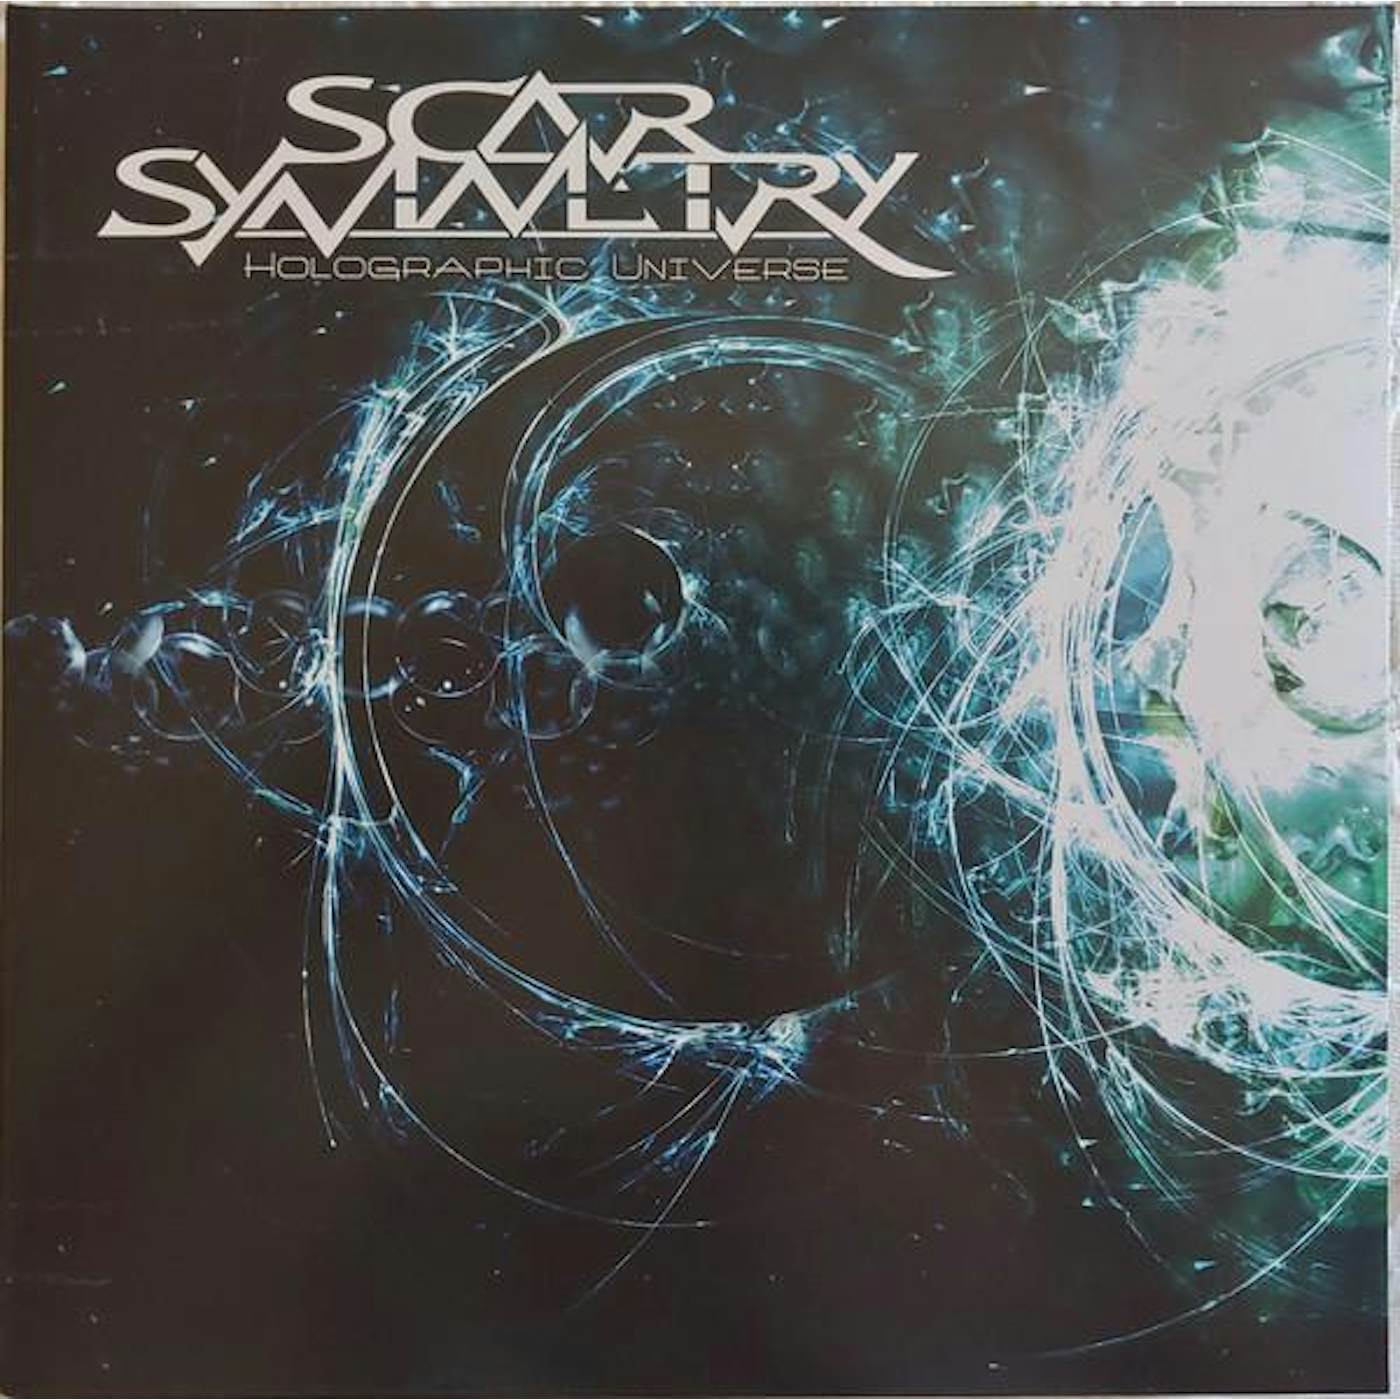 Scar Symmetry Holographic Universe (White Vinyl/2LP) Vinyl Record